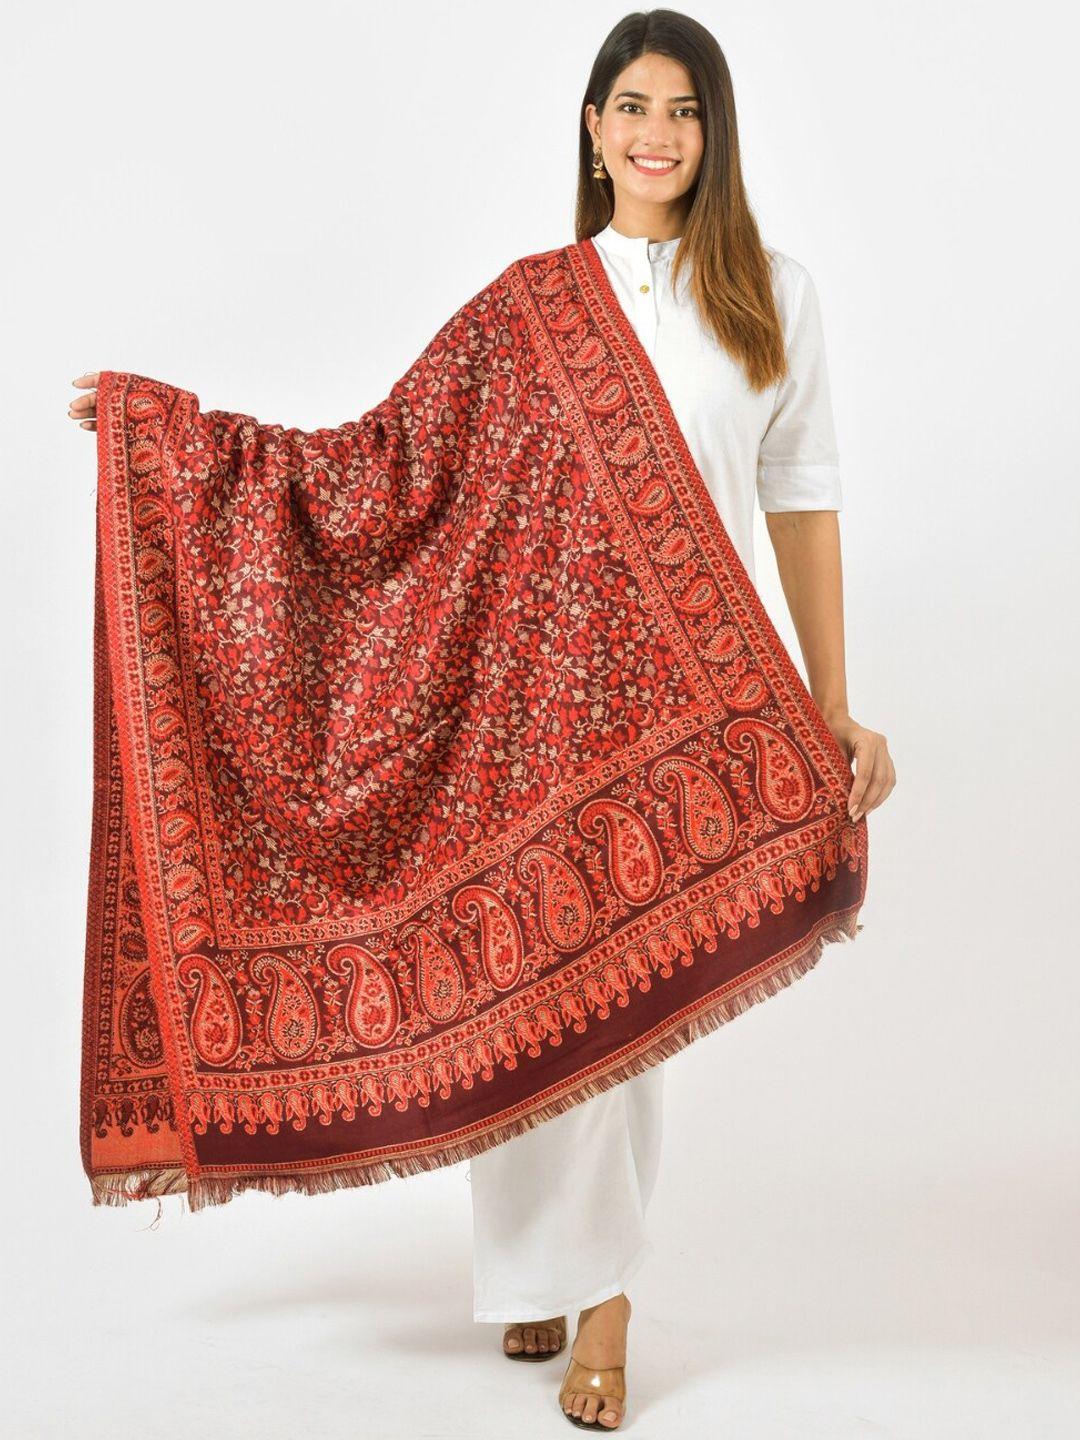 baisa unisex floral woven design shawl